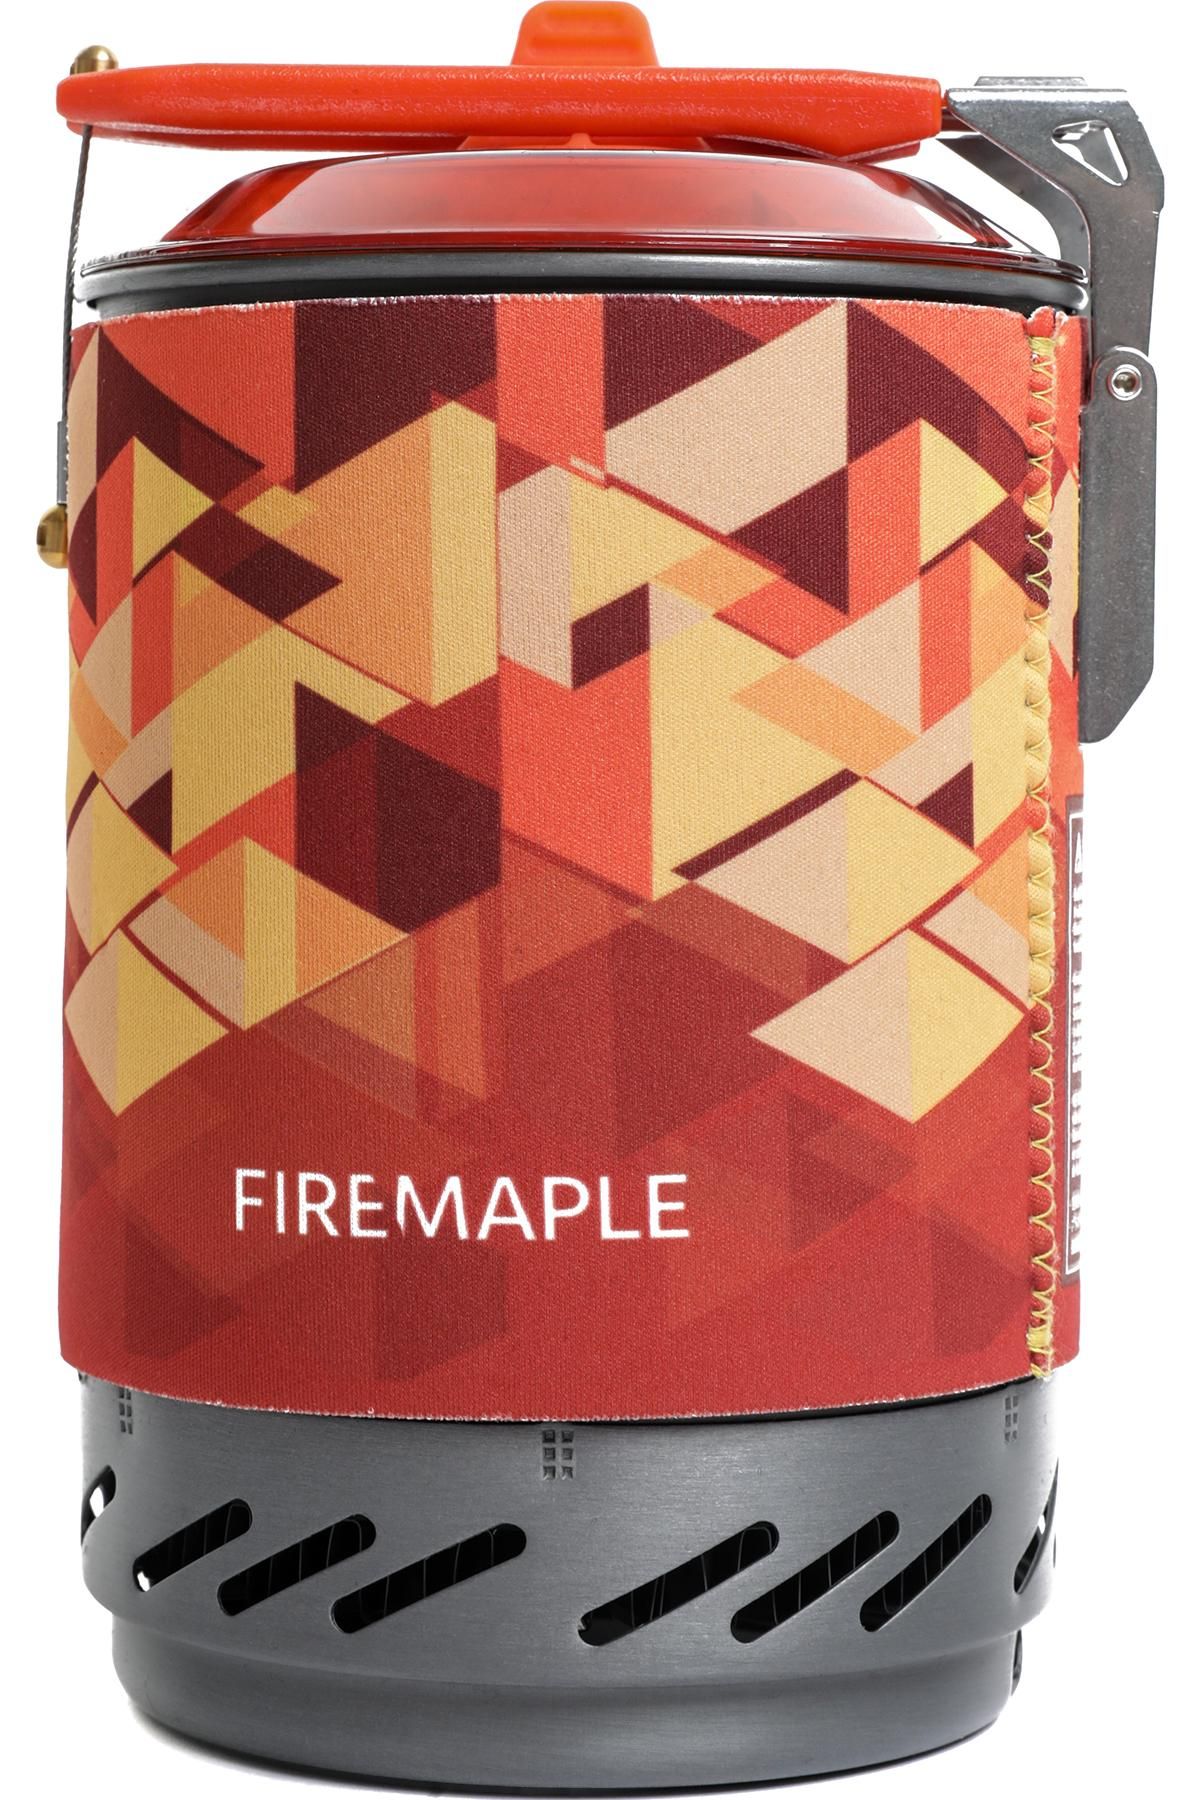 Fire maple fms. Горелка Fire-Maple FMS-x2 Star x2 оранжевый. Газовая горелка Fire-Maple Star FMS-x2. Горелка Fire Maple FMS. Fire-Maple Star x2 (Black).